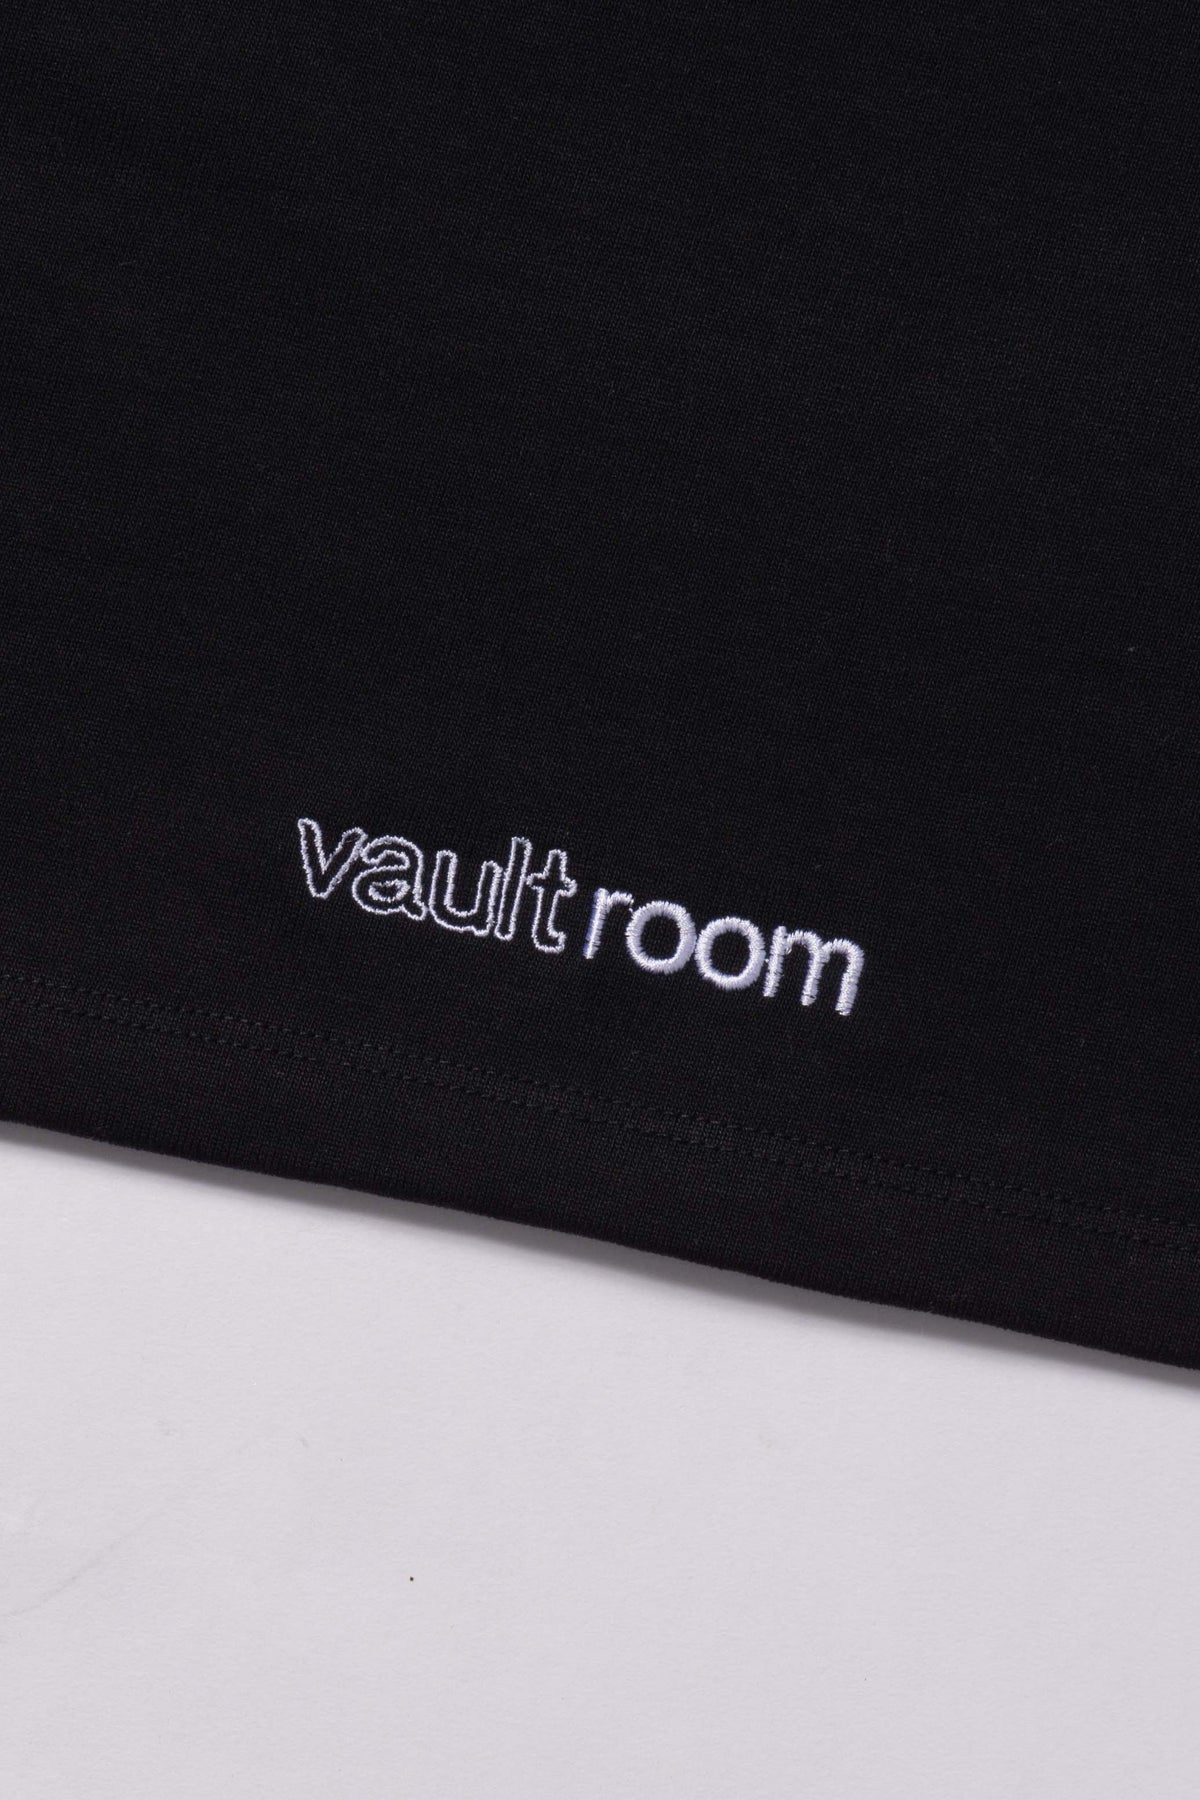 vaultroom  LOGO MINI CROPPED TEE / WHT新品